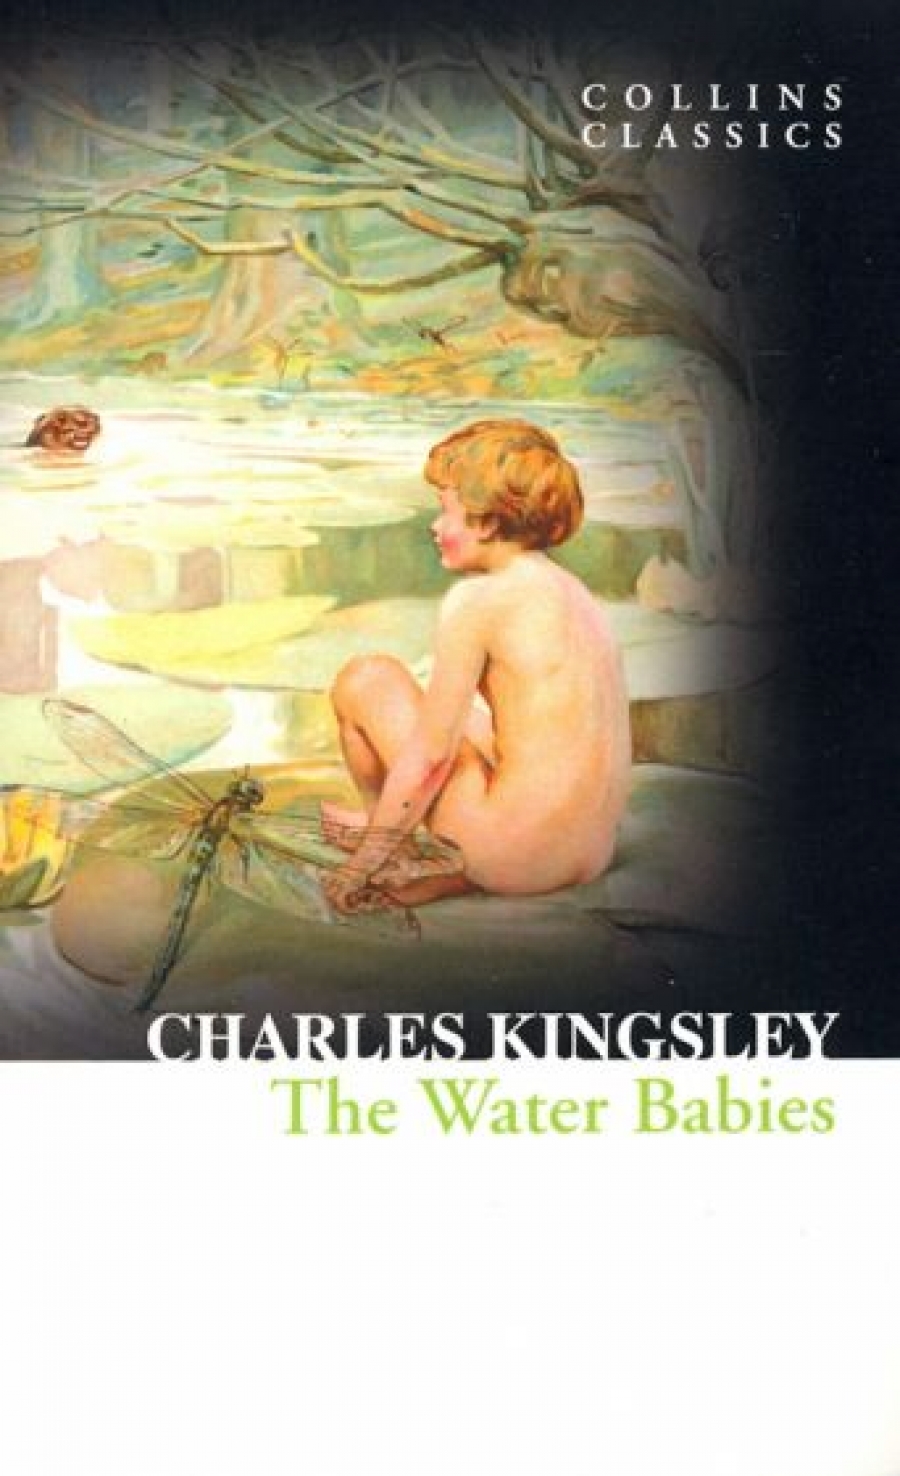 Charles, Kingsley The Water Babies 